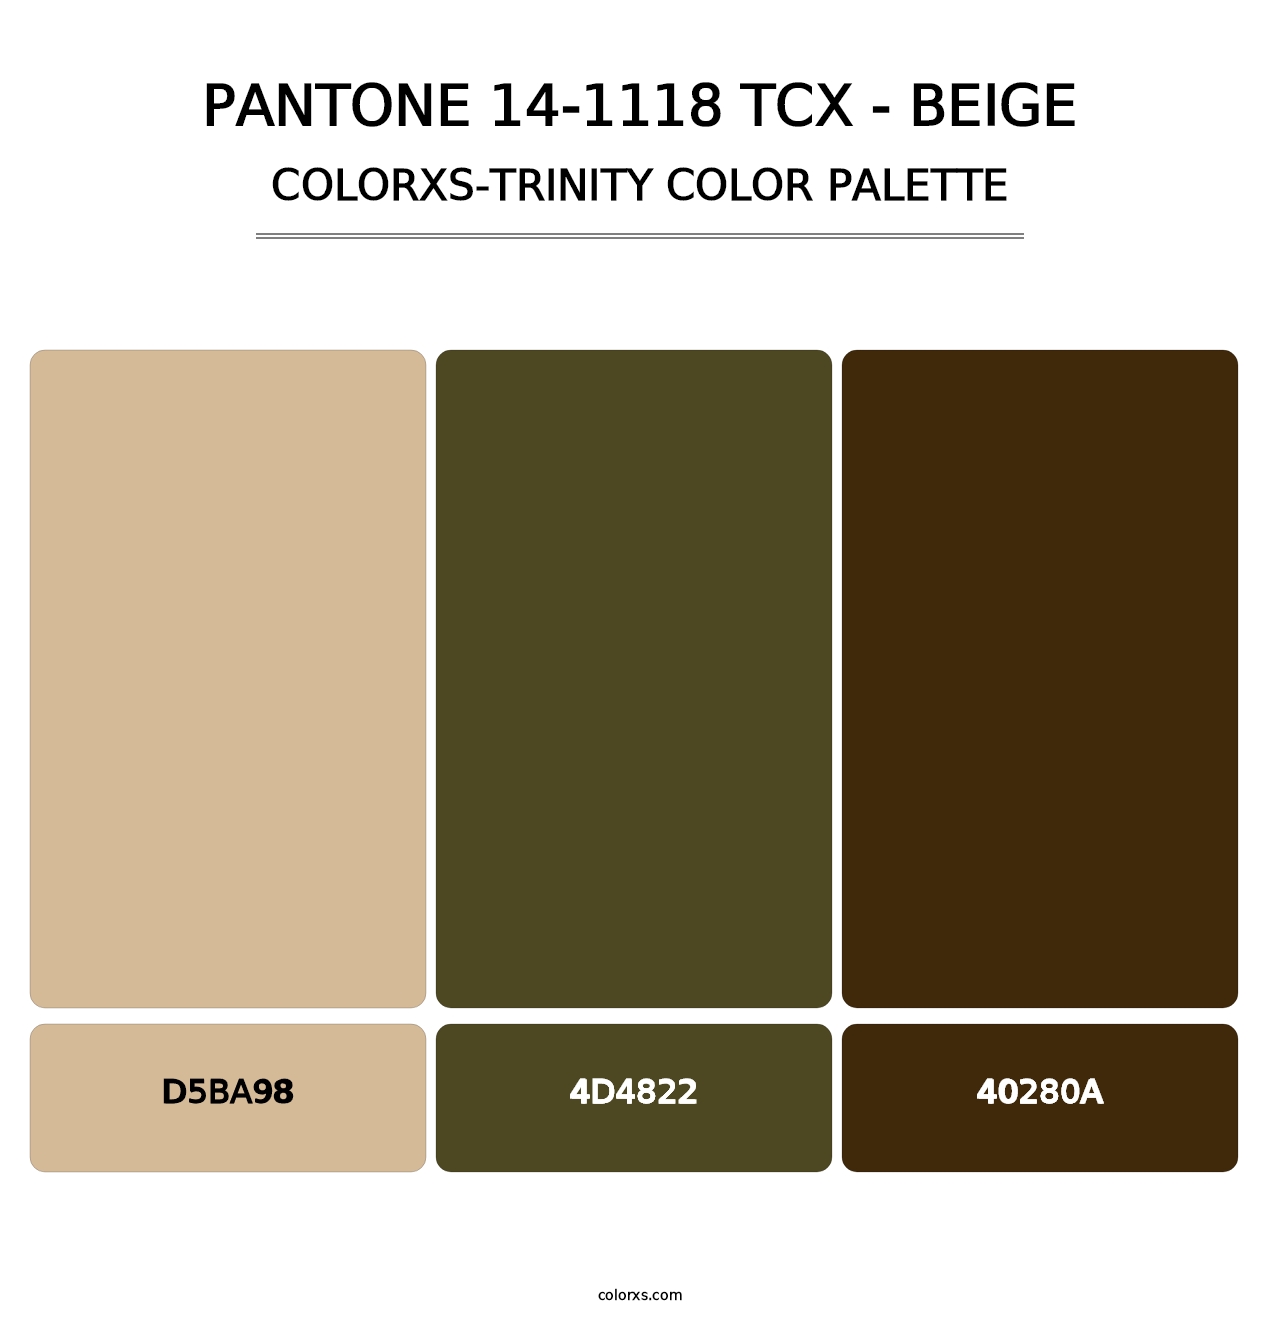 PANTONE 14-1118 TCX - Beige - Colorxs Trinity Palette